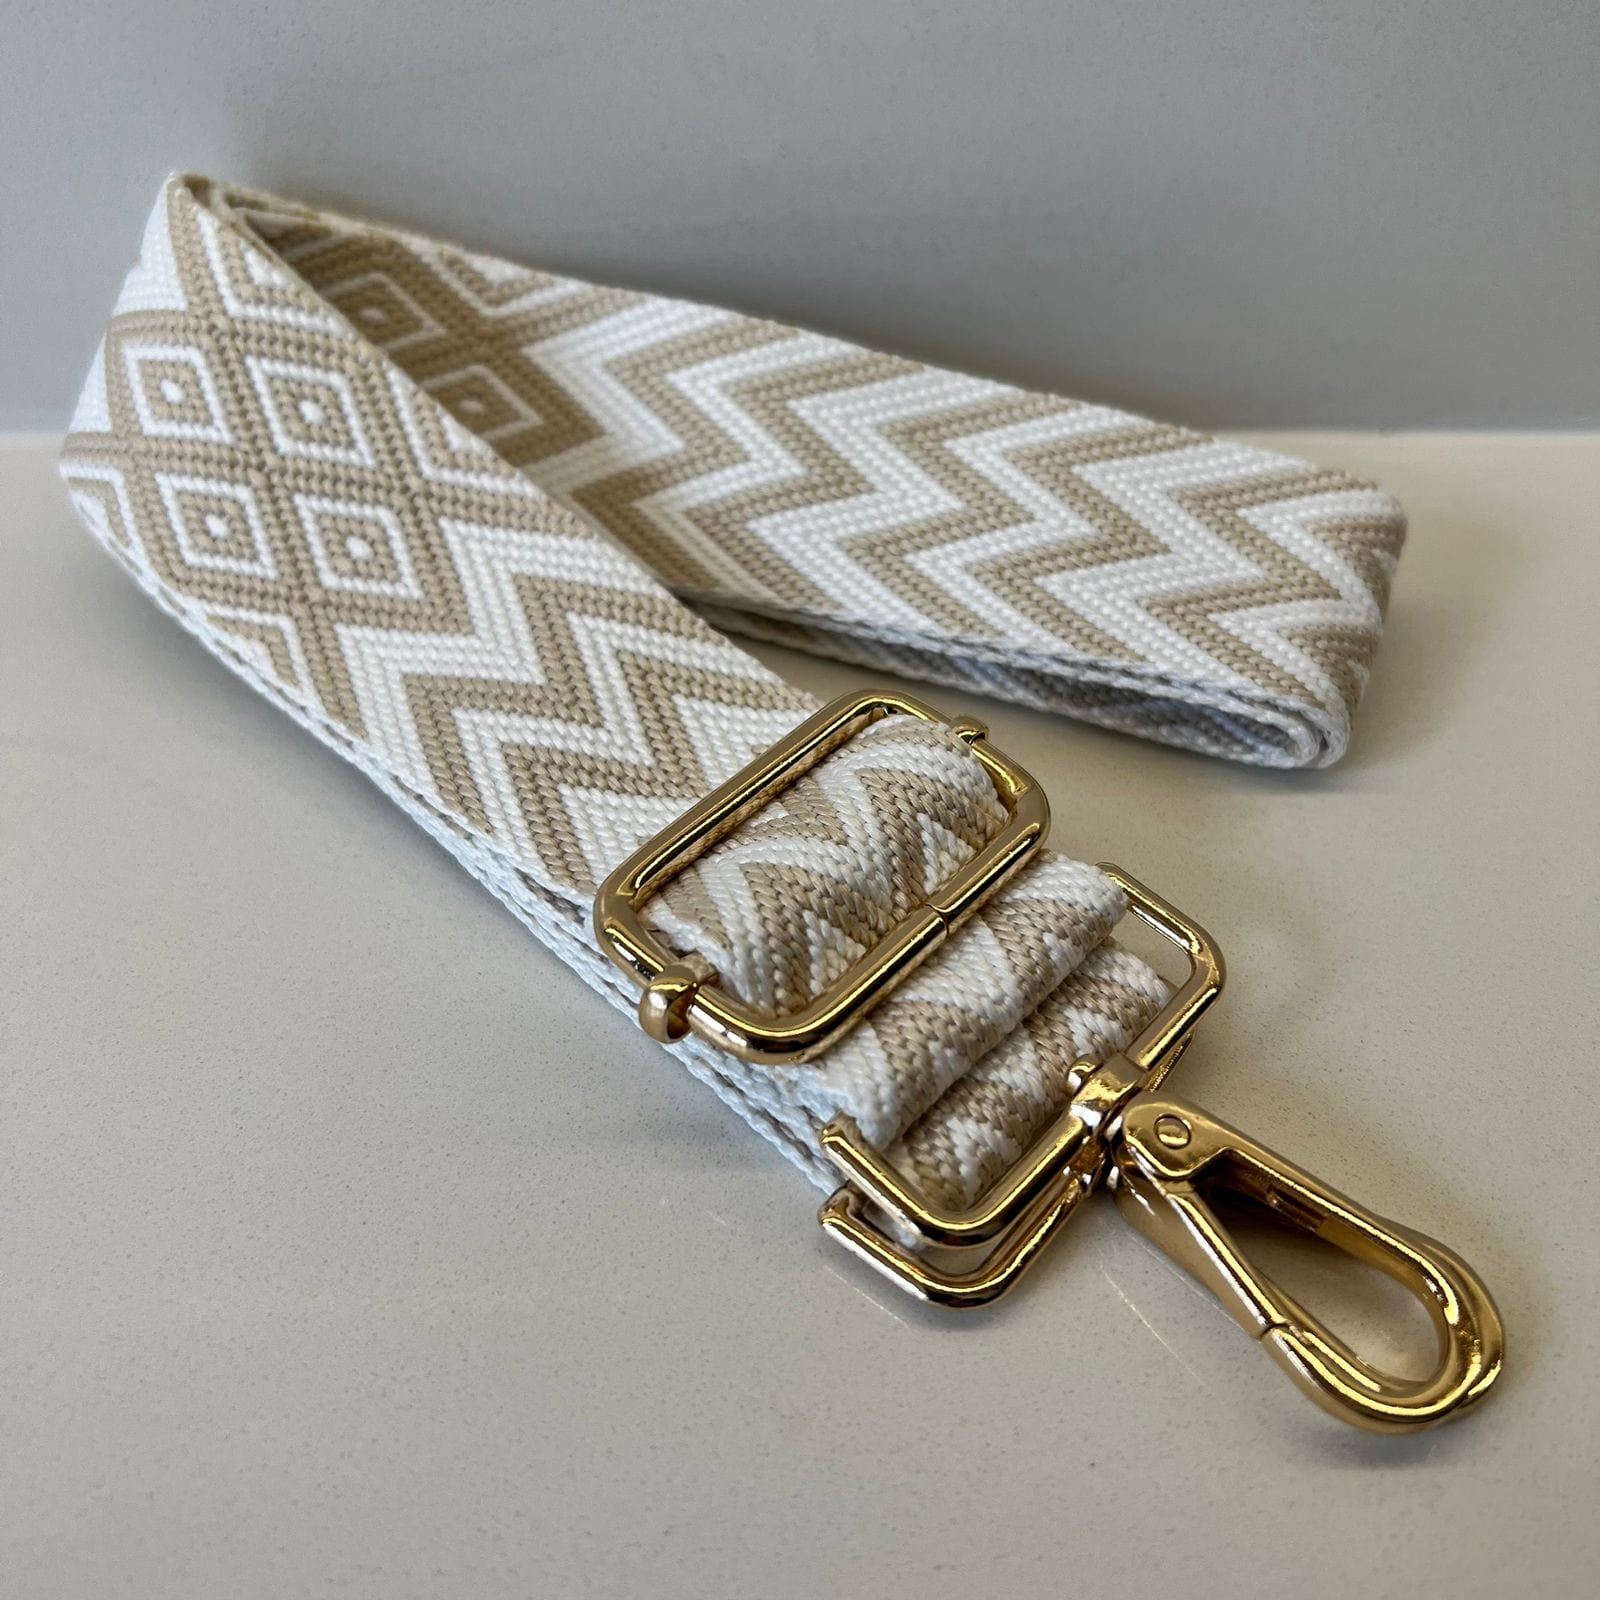 Suprene Bags Handbag & Wallet Accessories Bag Strap - Chevron White and Beige